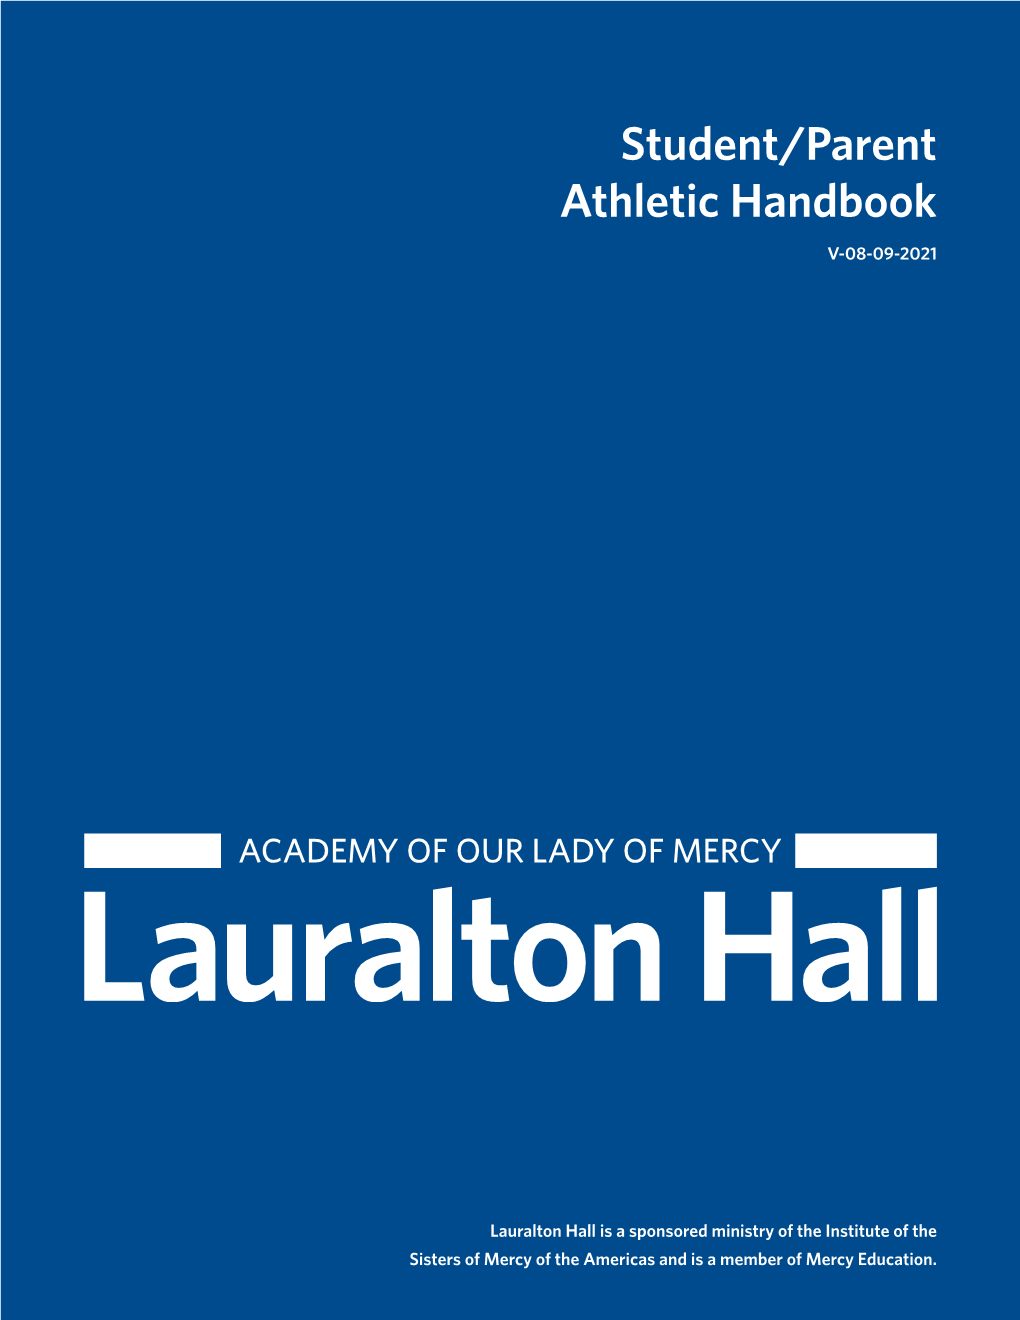 Student/Parent Athletic Handbook